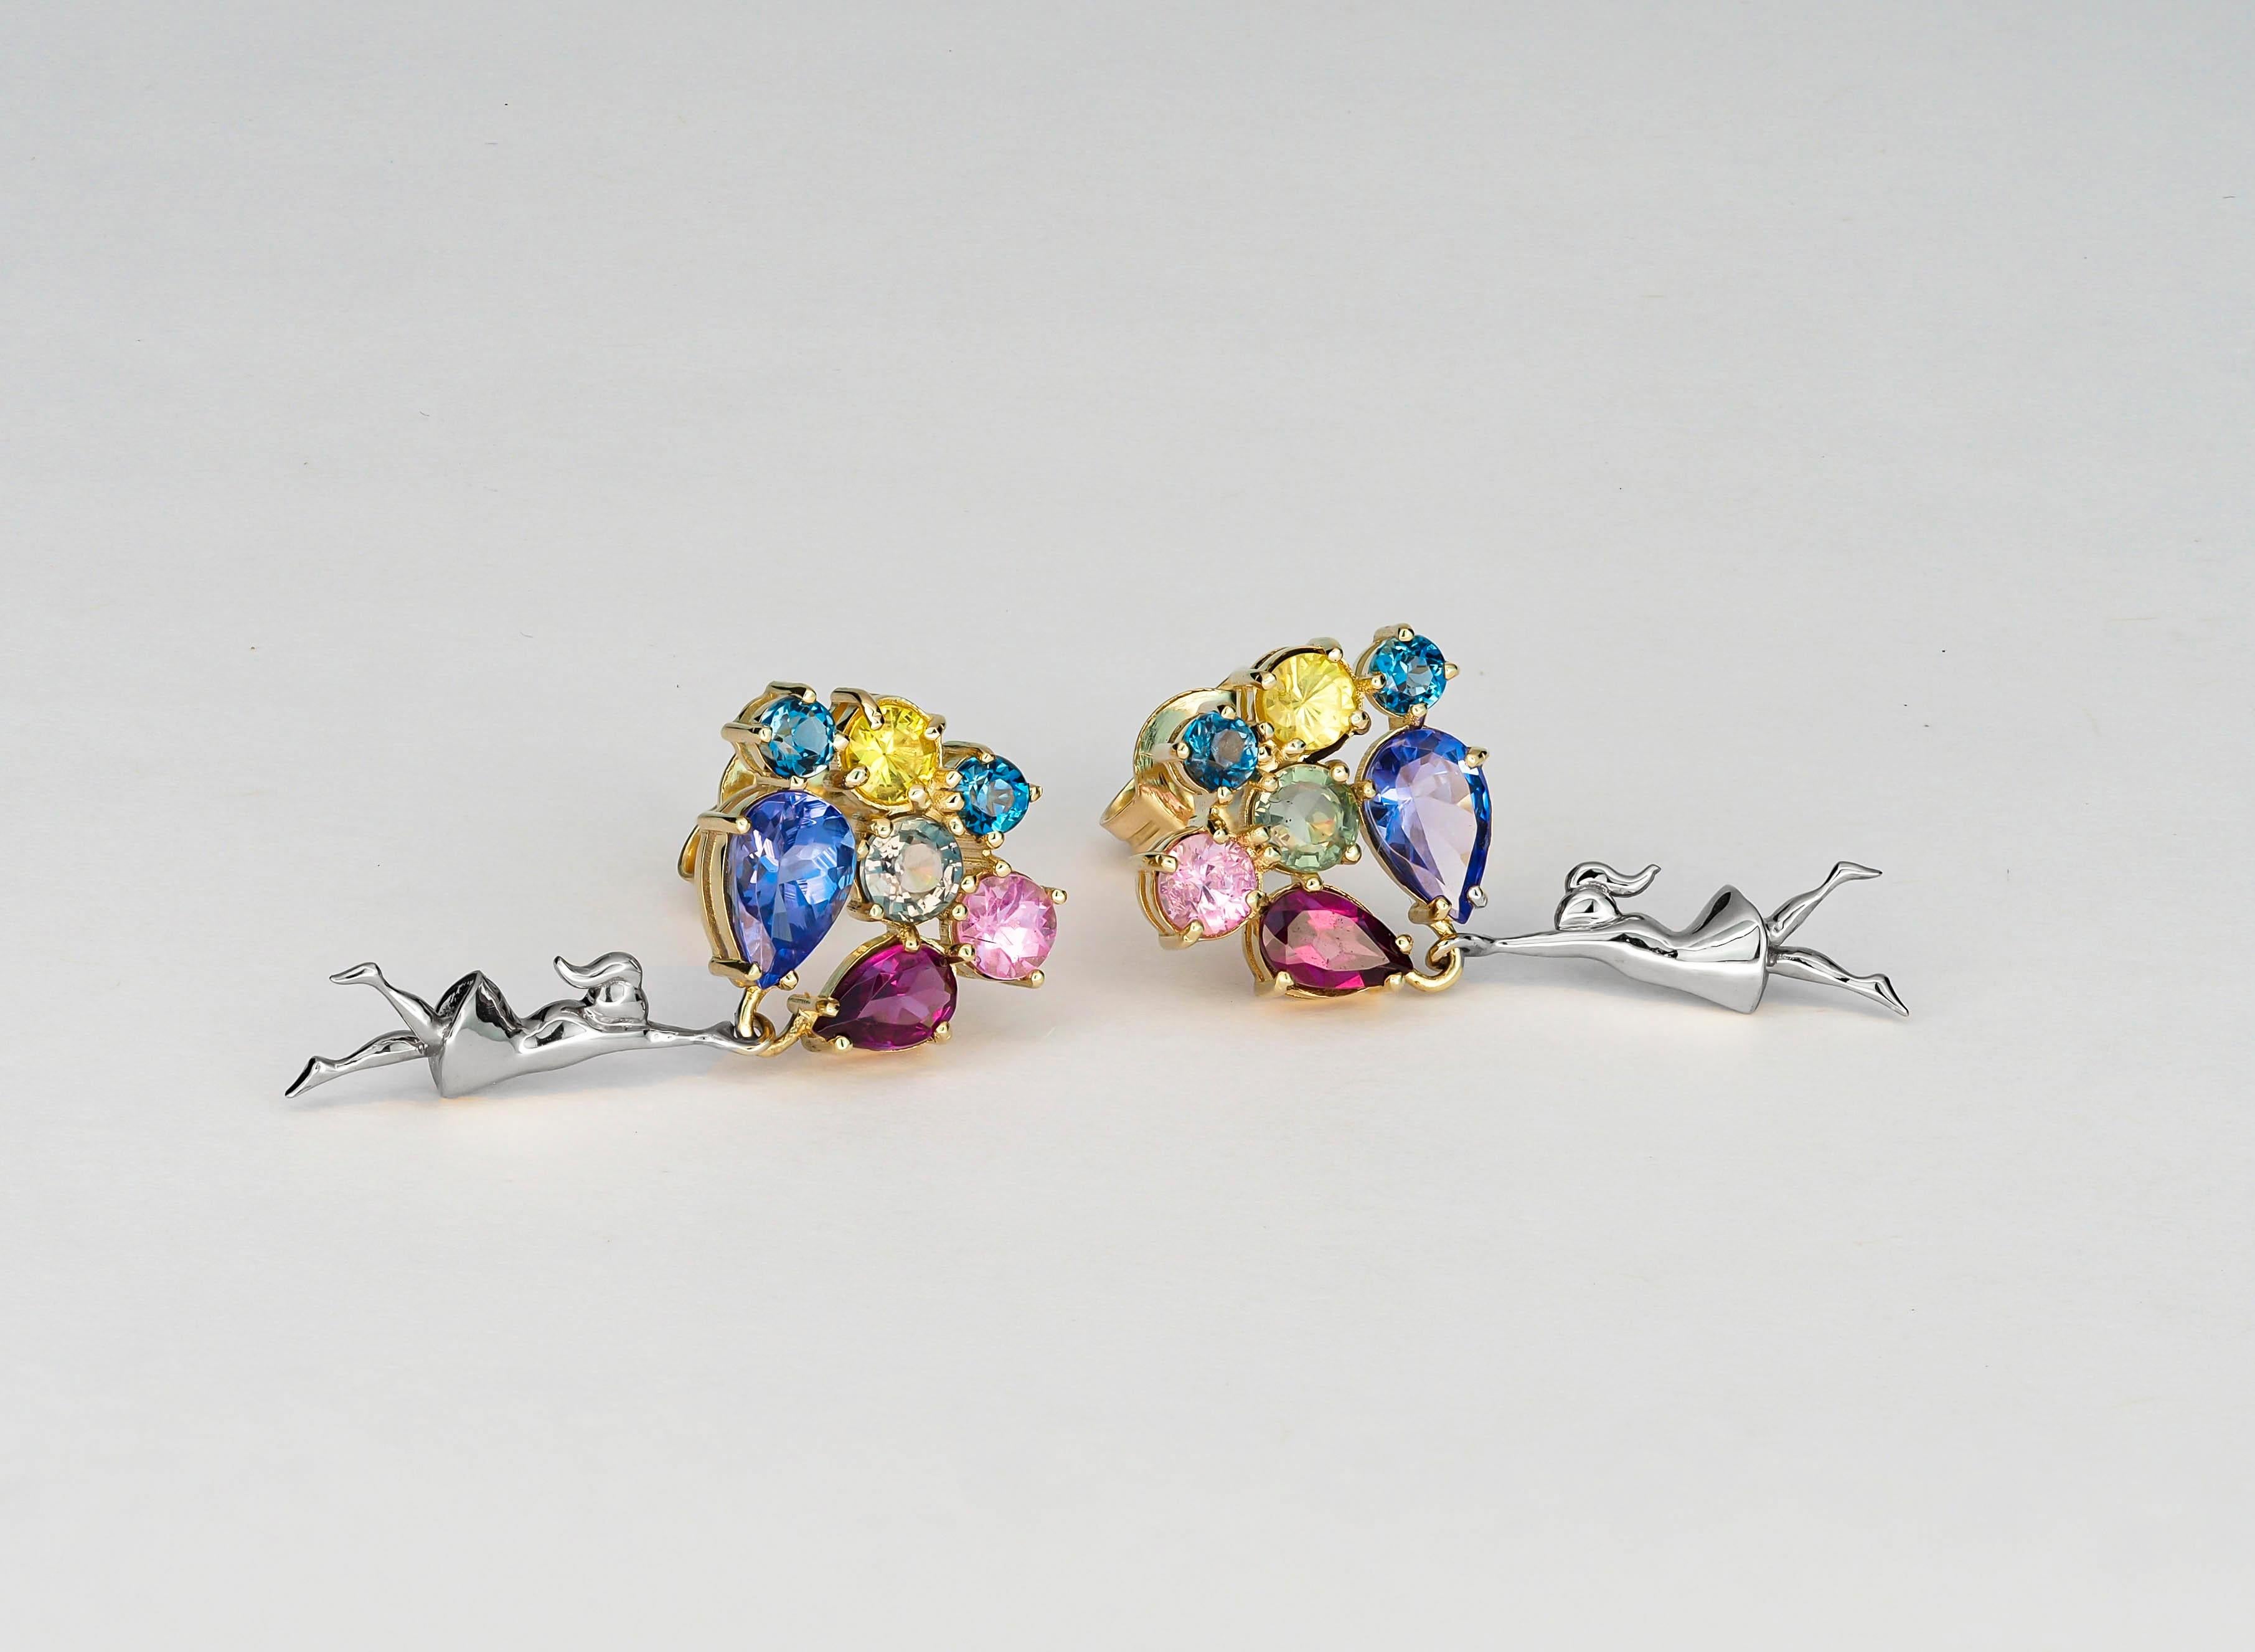 Contemporary Girl on Balloons 14k gold Earrings Studs. Sapphires earrings in 14k gold. ! For Sale